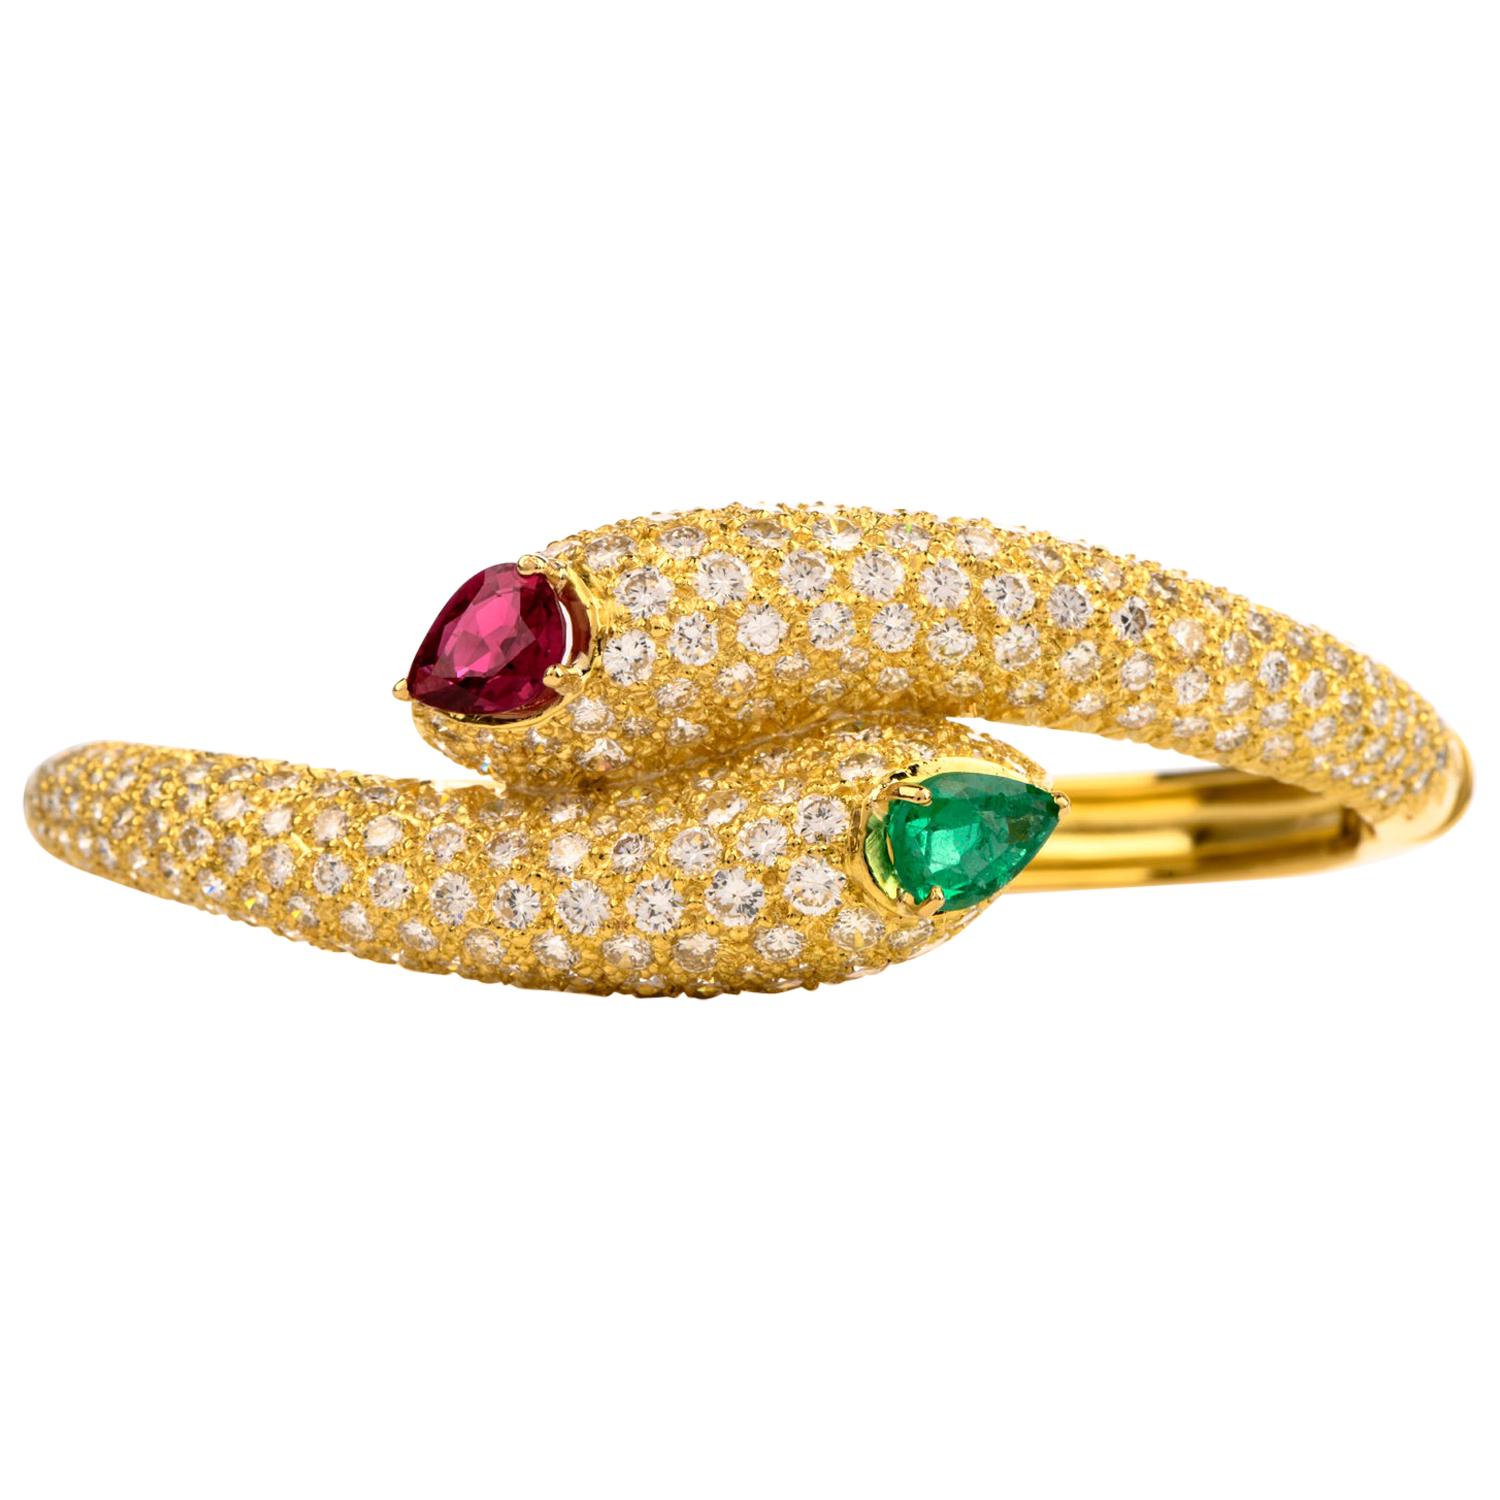 Estate Diamond Ruby Emerald Serpent Bypass Bangle Bracelet